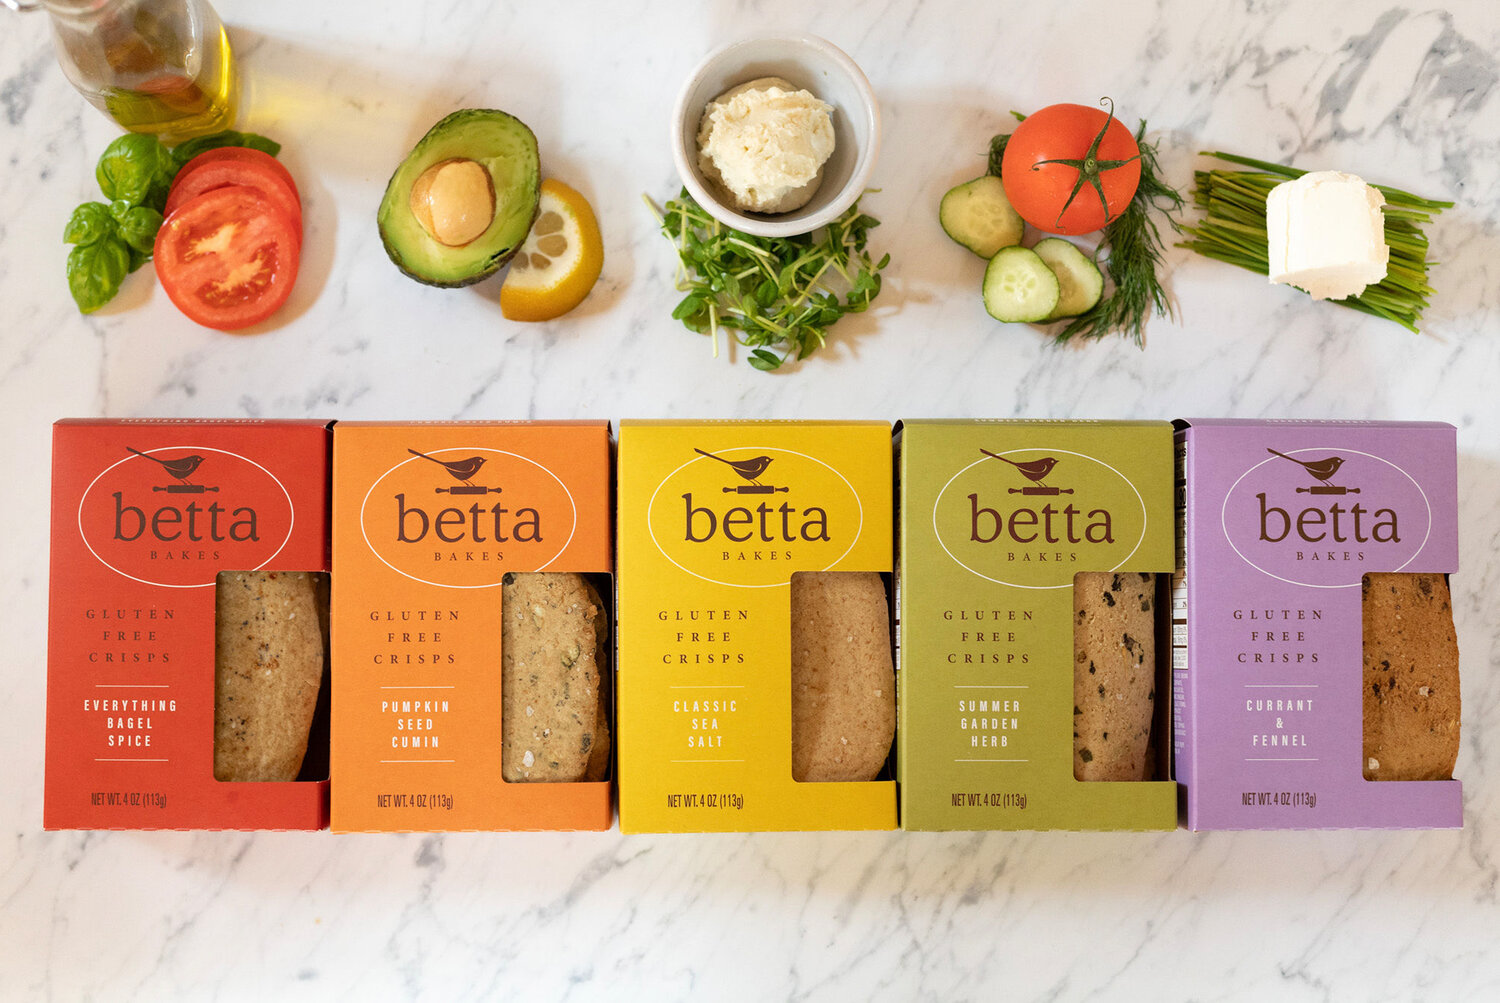 Betta Bakes crisps come in five artisan flavors